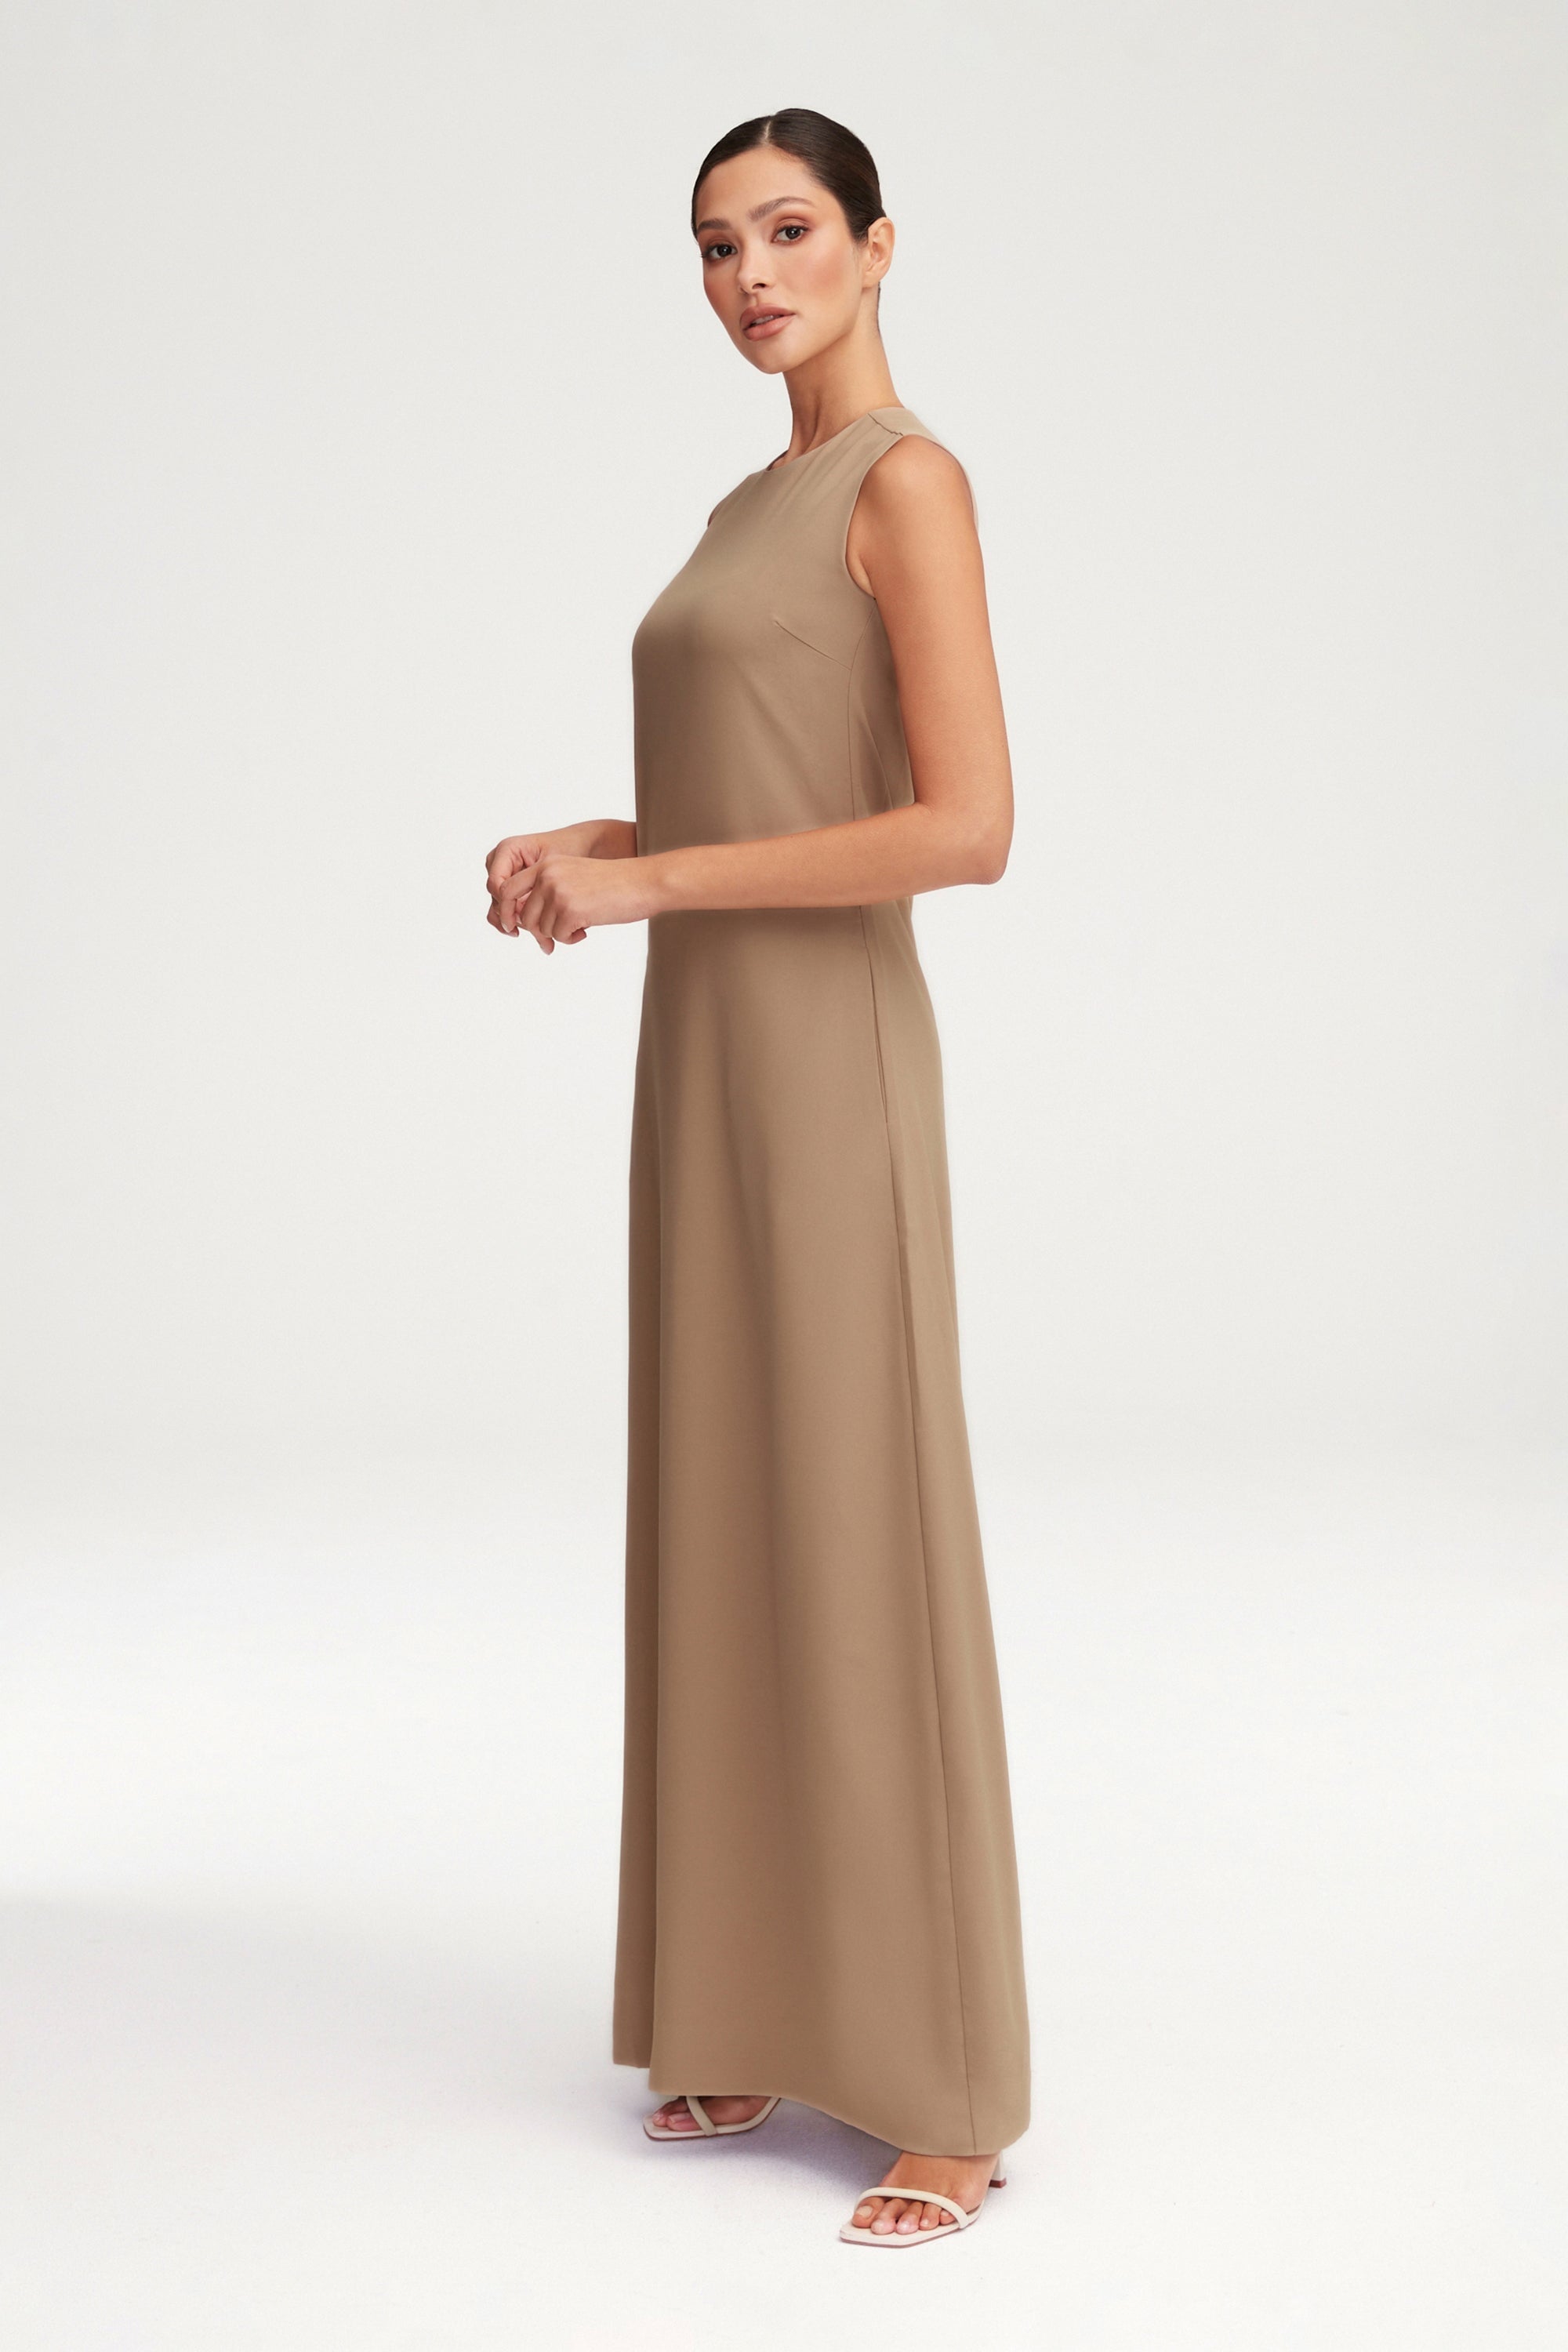 Essential Sleeveless Maxi Slip Dress - Caffe Clothing Veiled 